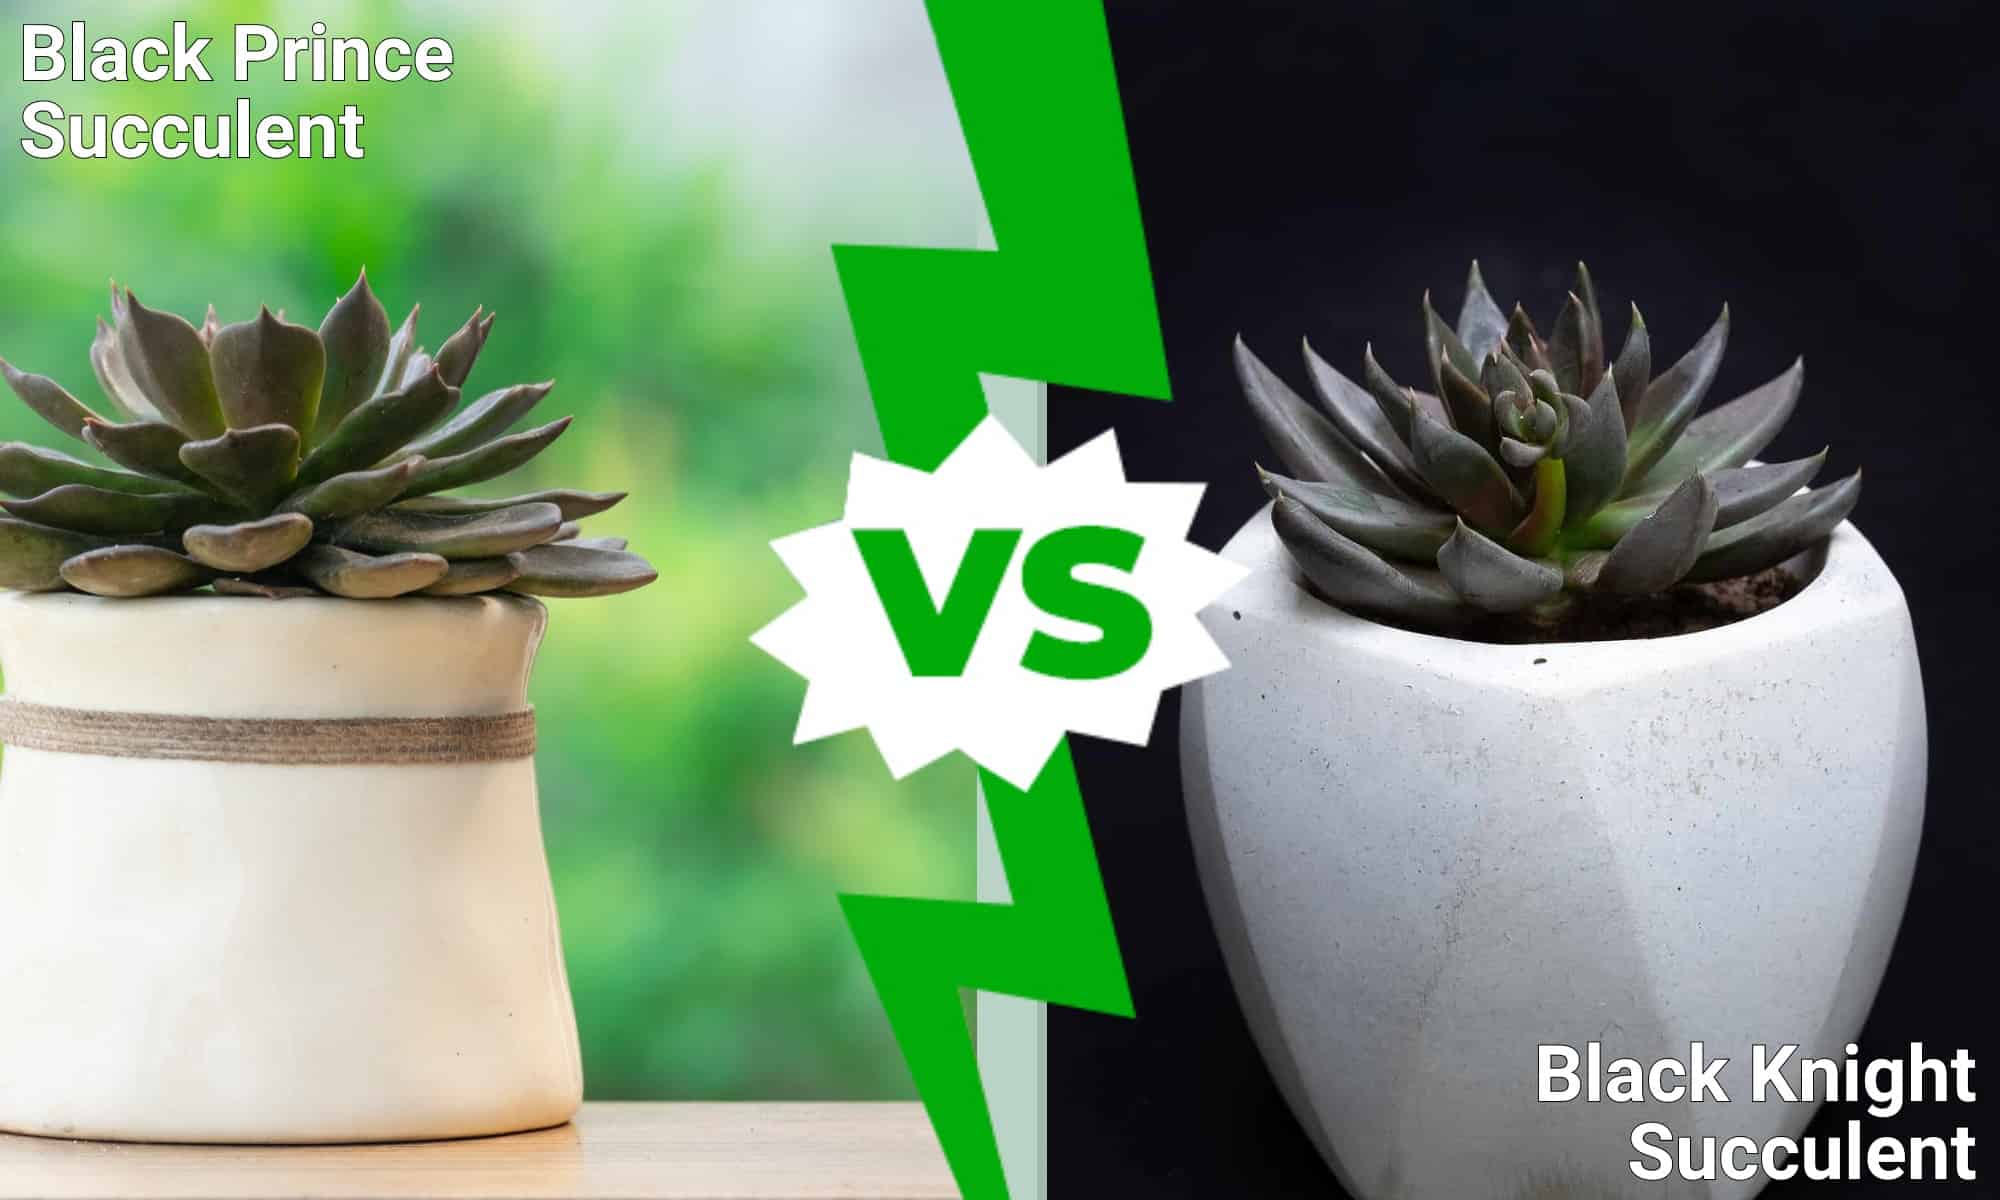 Black Prince Succulent vs. Black Knight Succulent